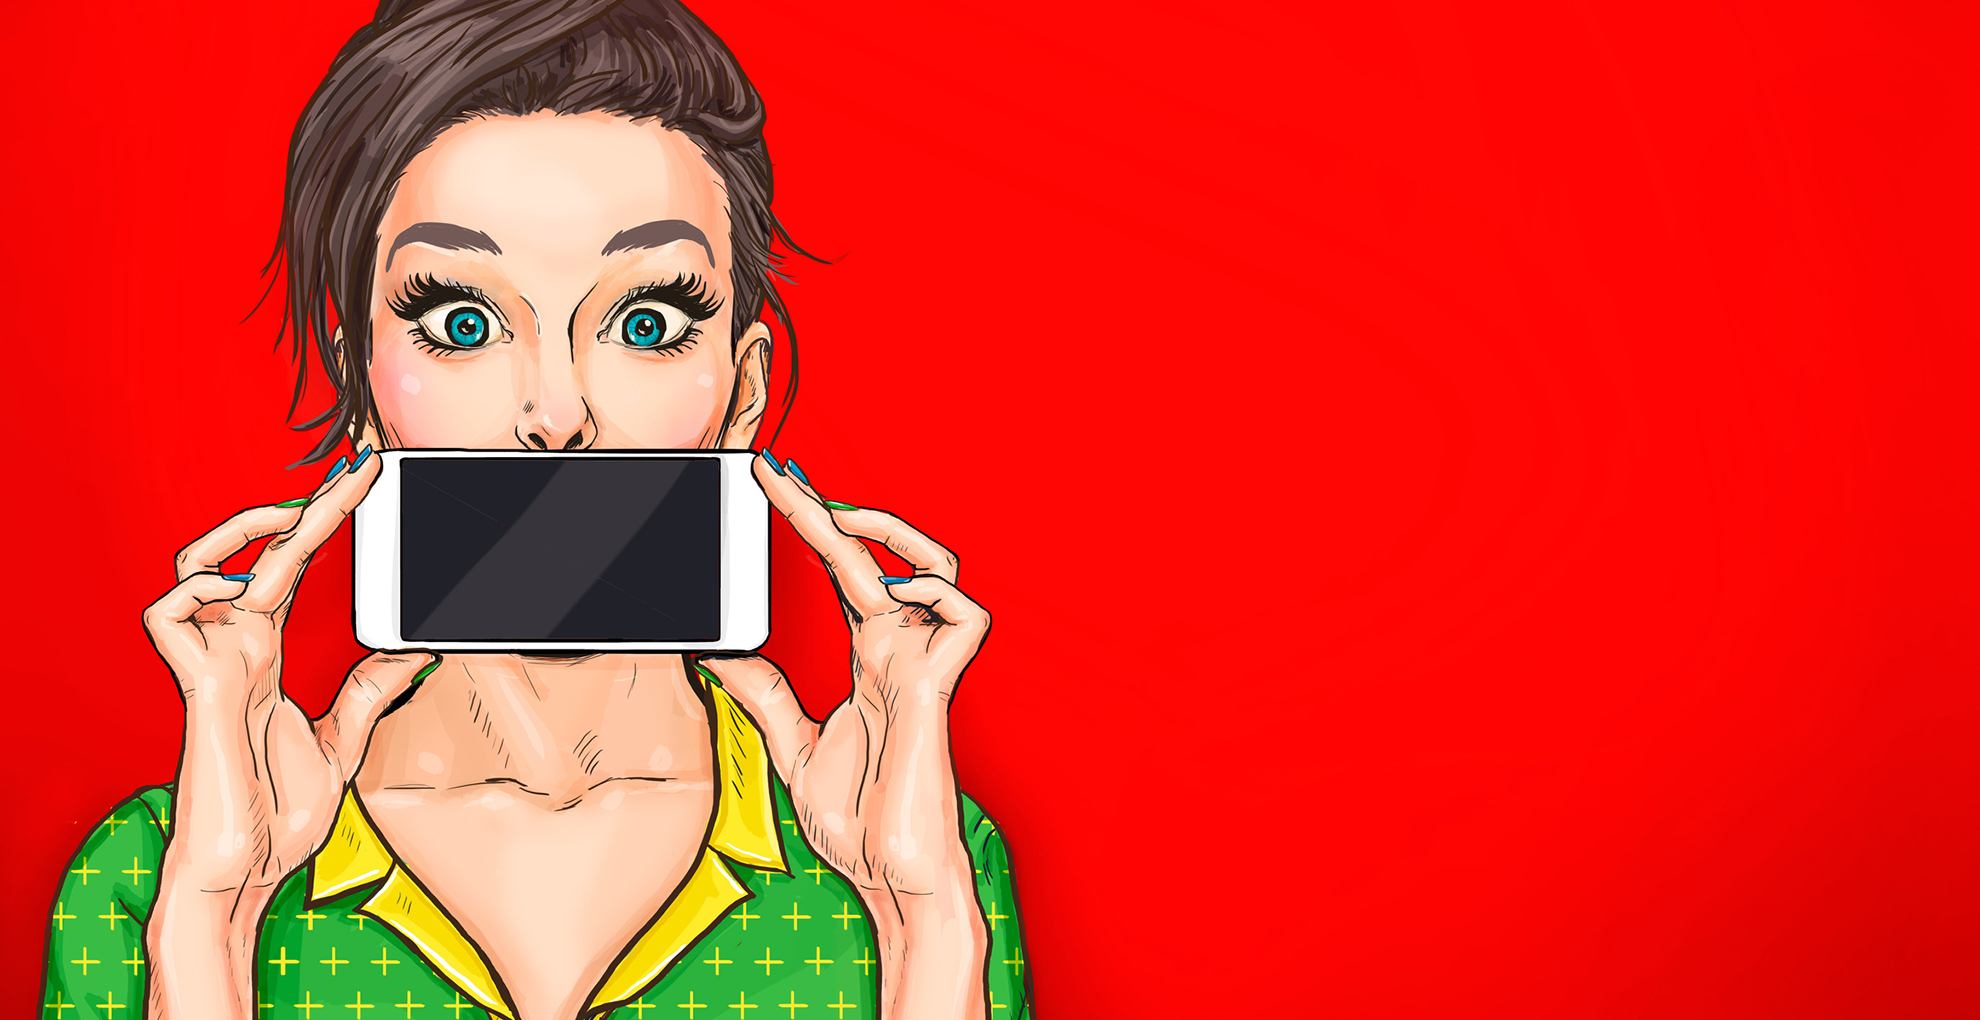 Comic überraschte Frau hält Smartphone vor dem Gesicht